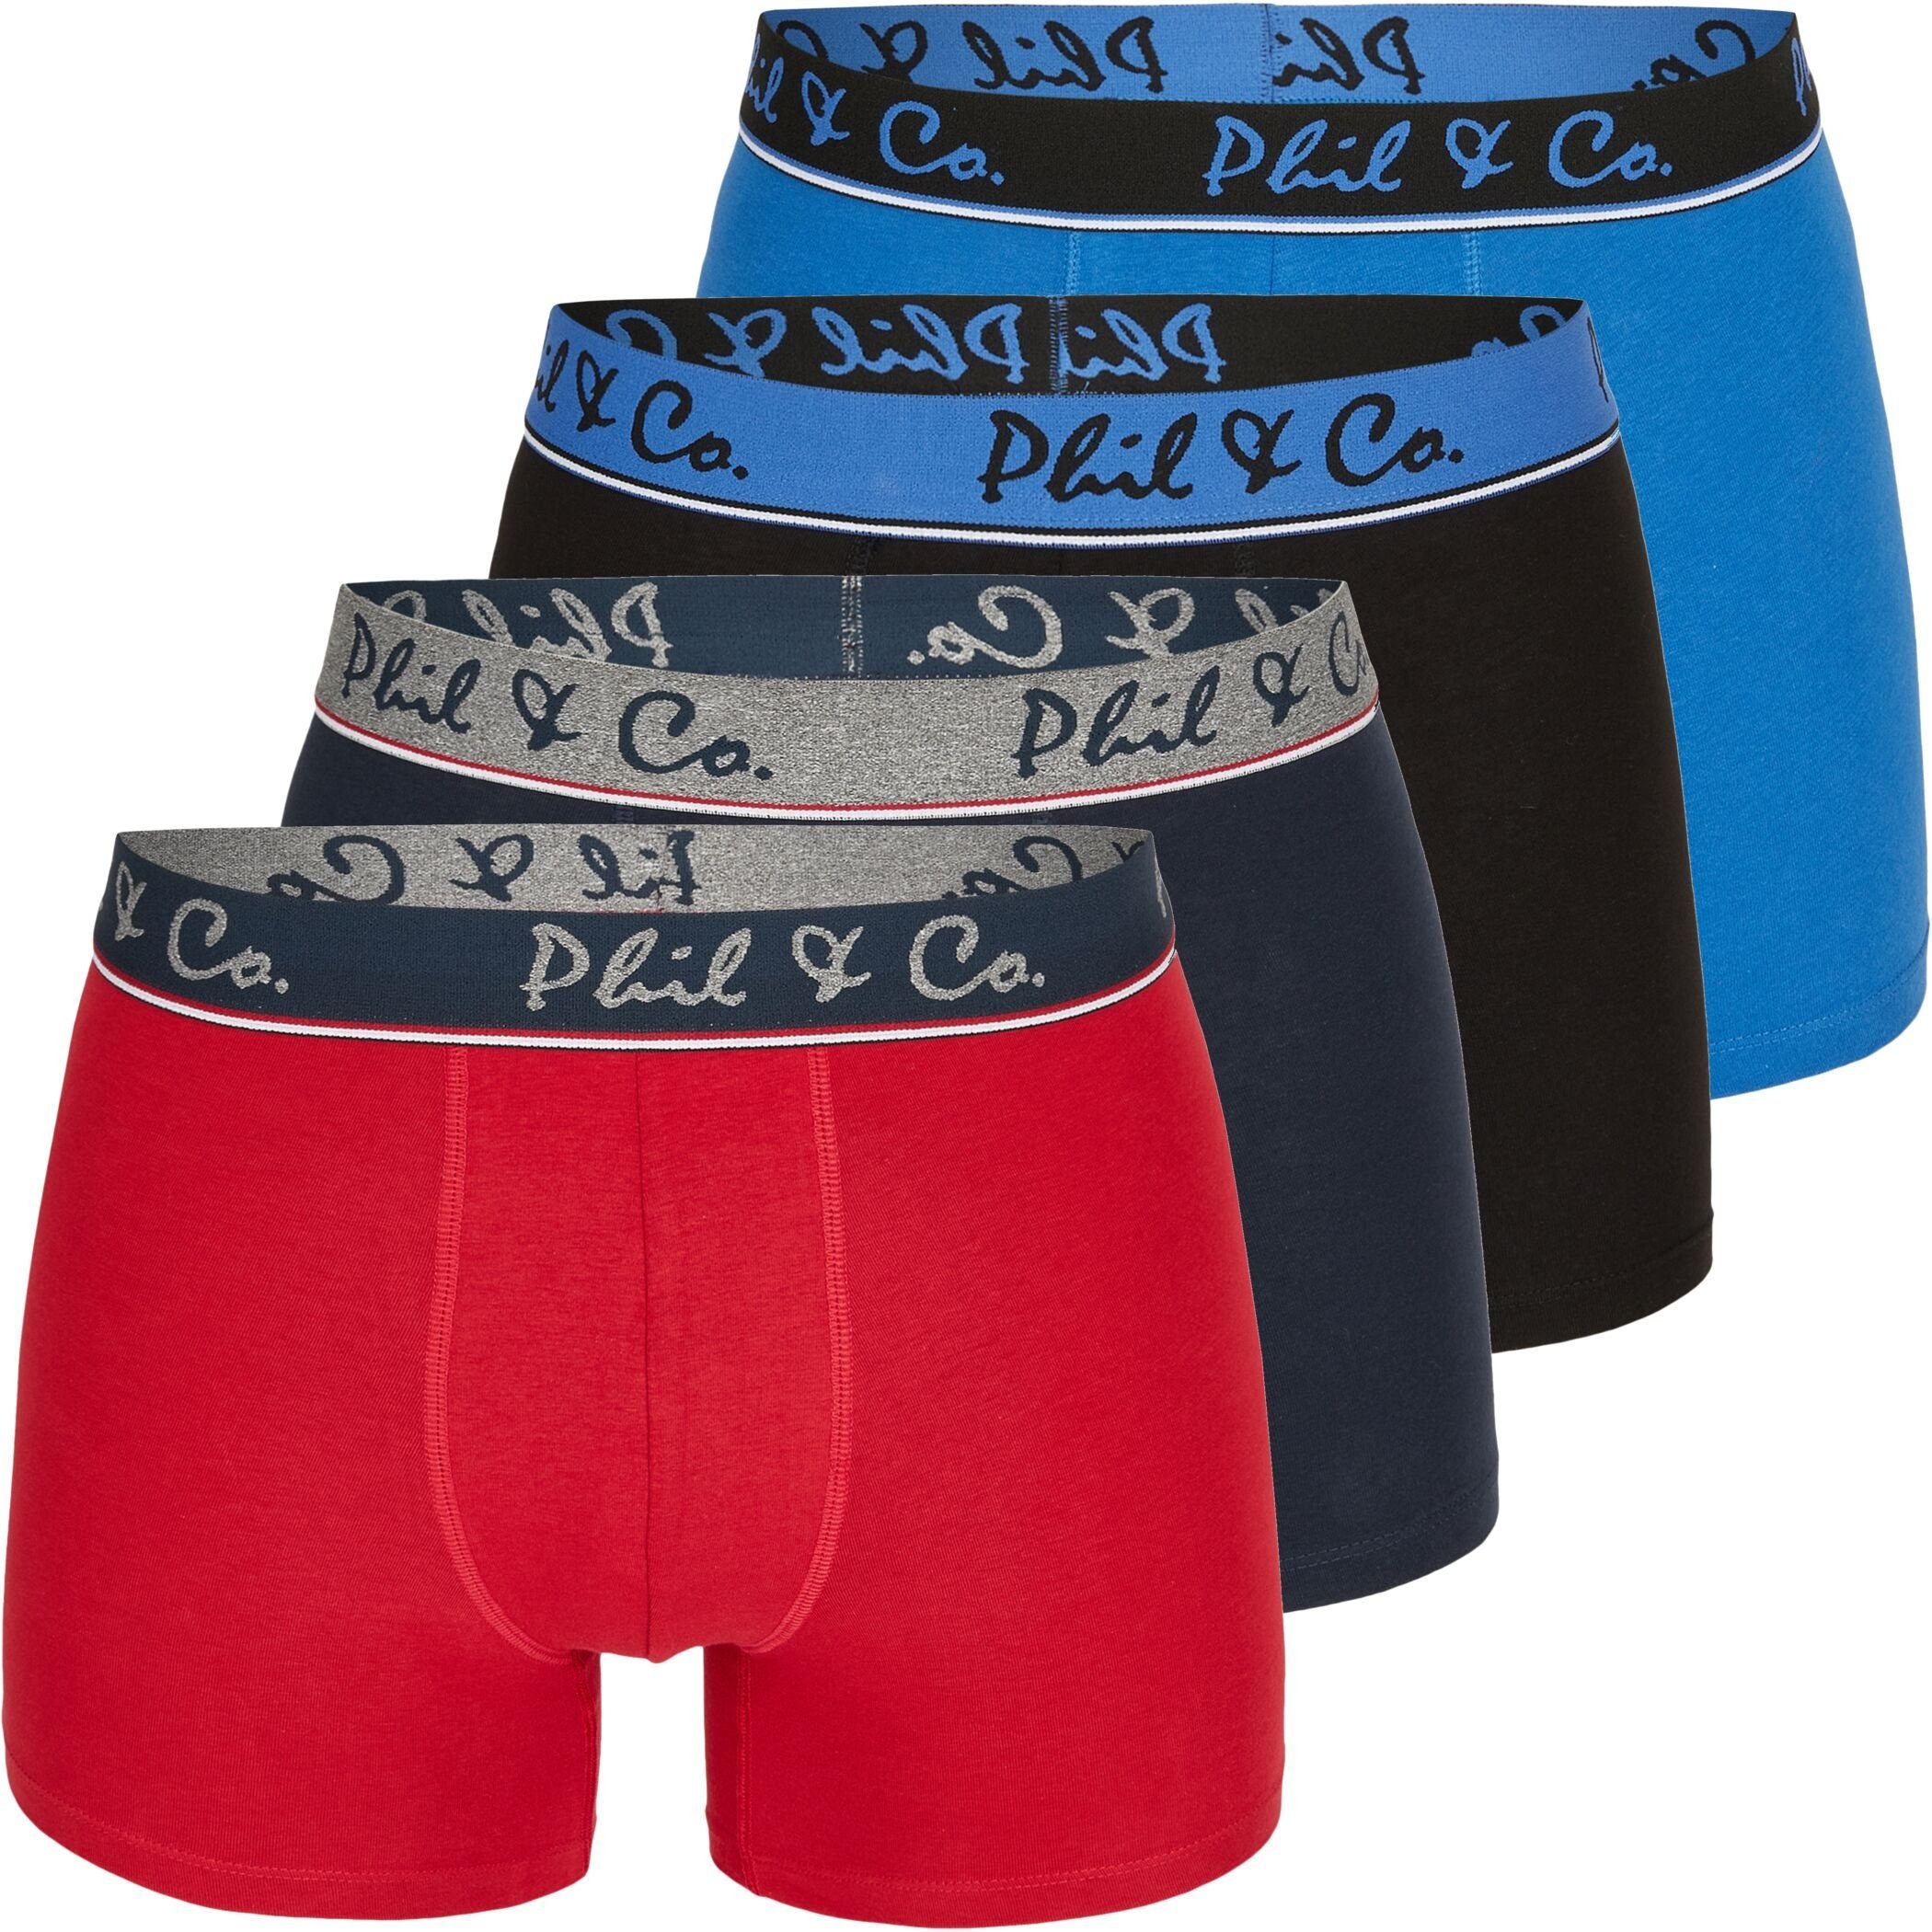 Phil & Co. Boxershorts 4er Pack Phil & Co Berlin Jersey Boxershorts Trunk Short Pant FARBWAHL (1-St) DESIGN 18